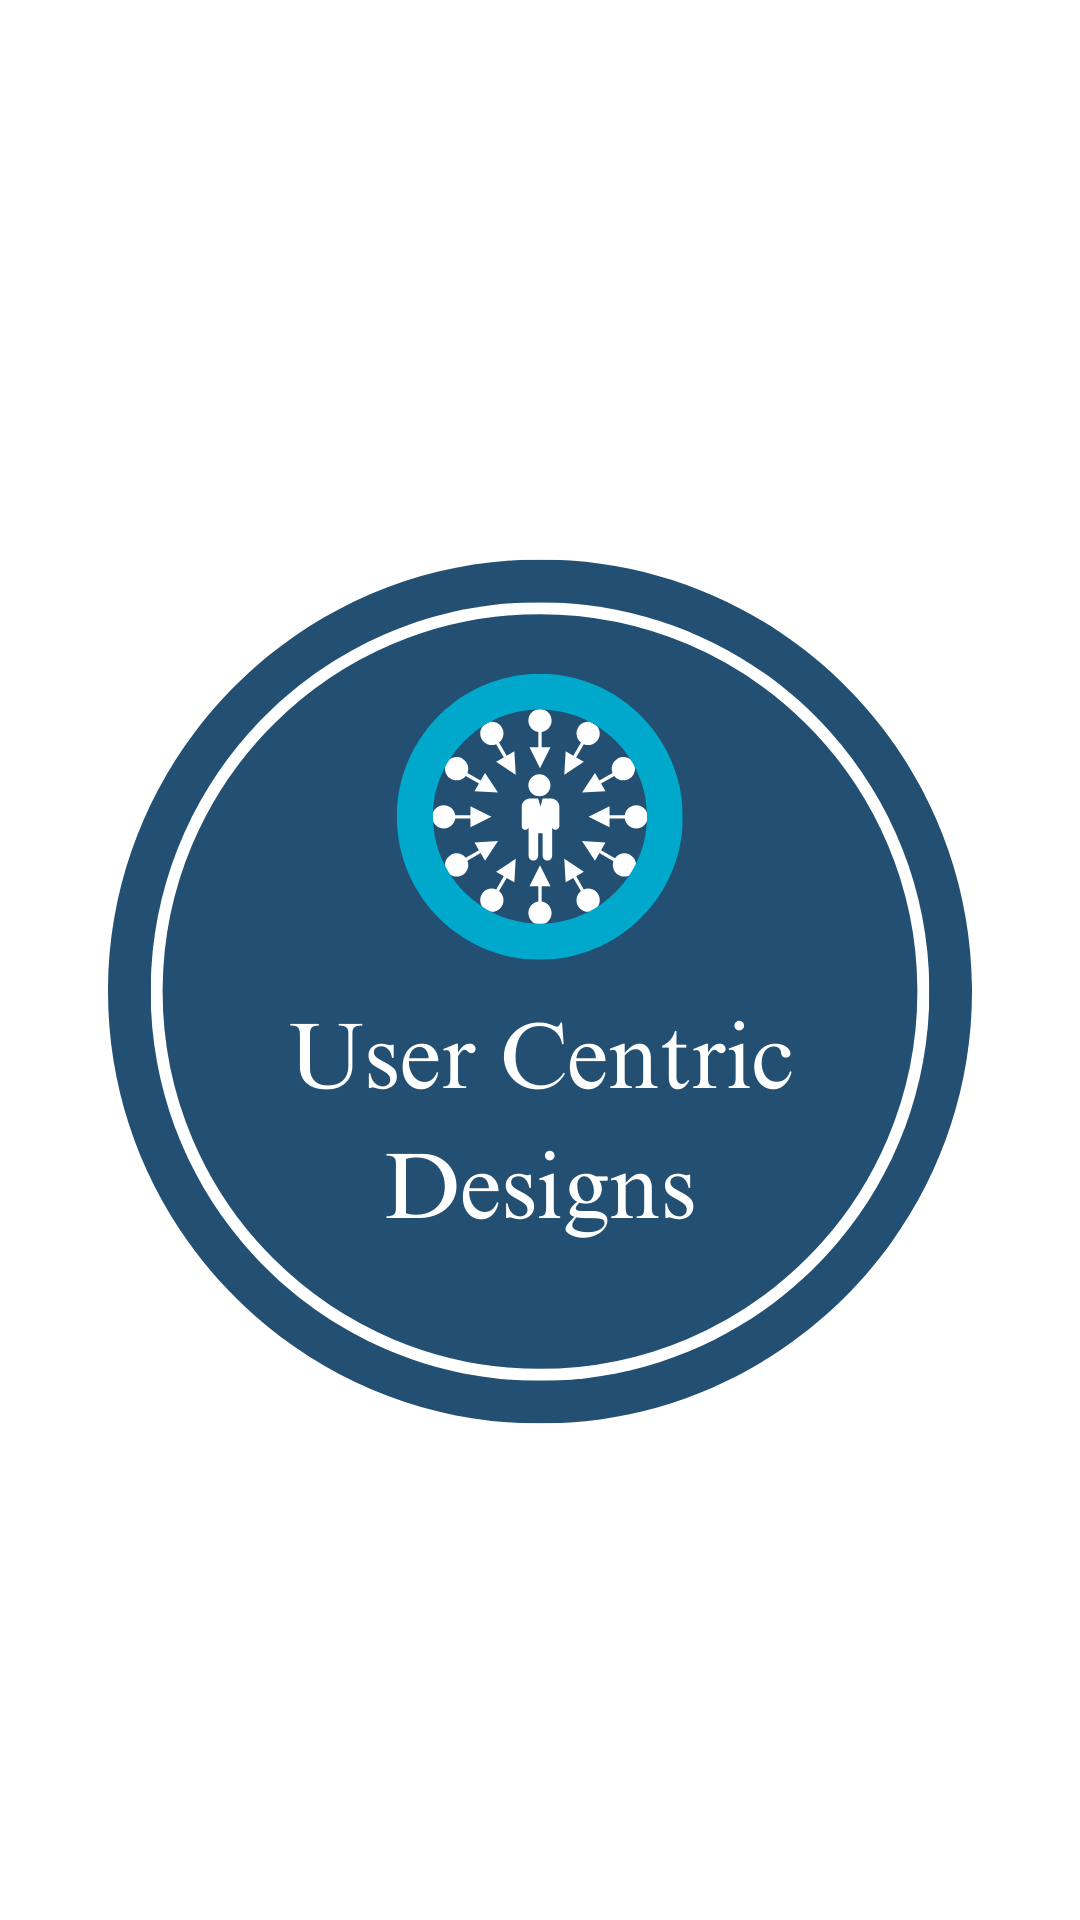 User Centric Designs